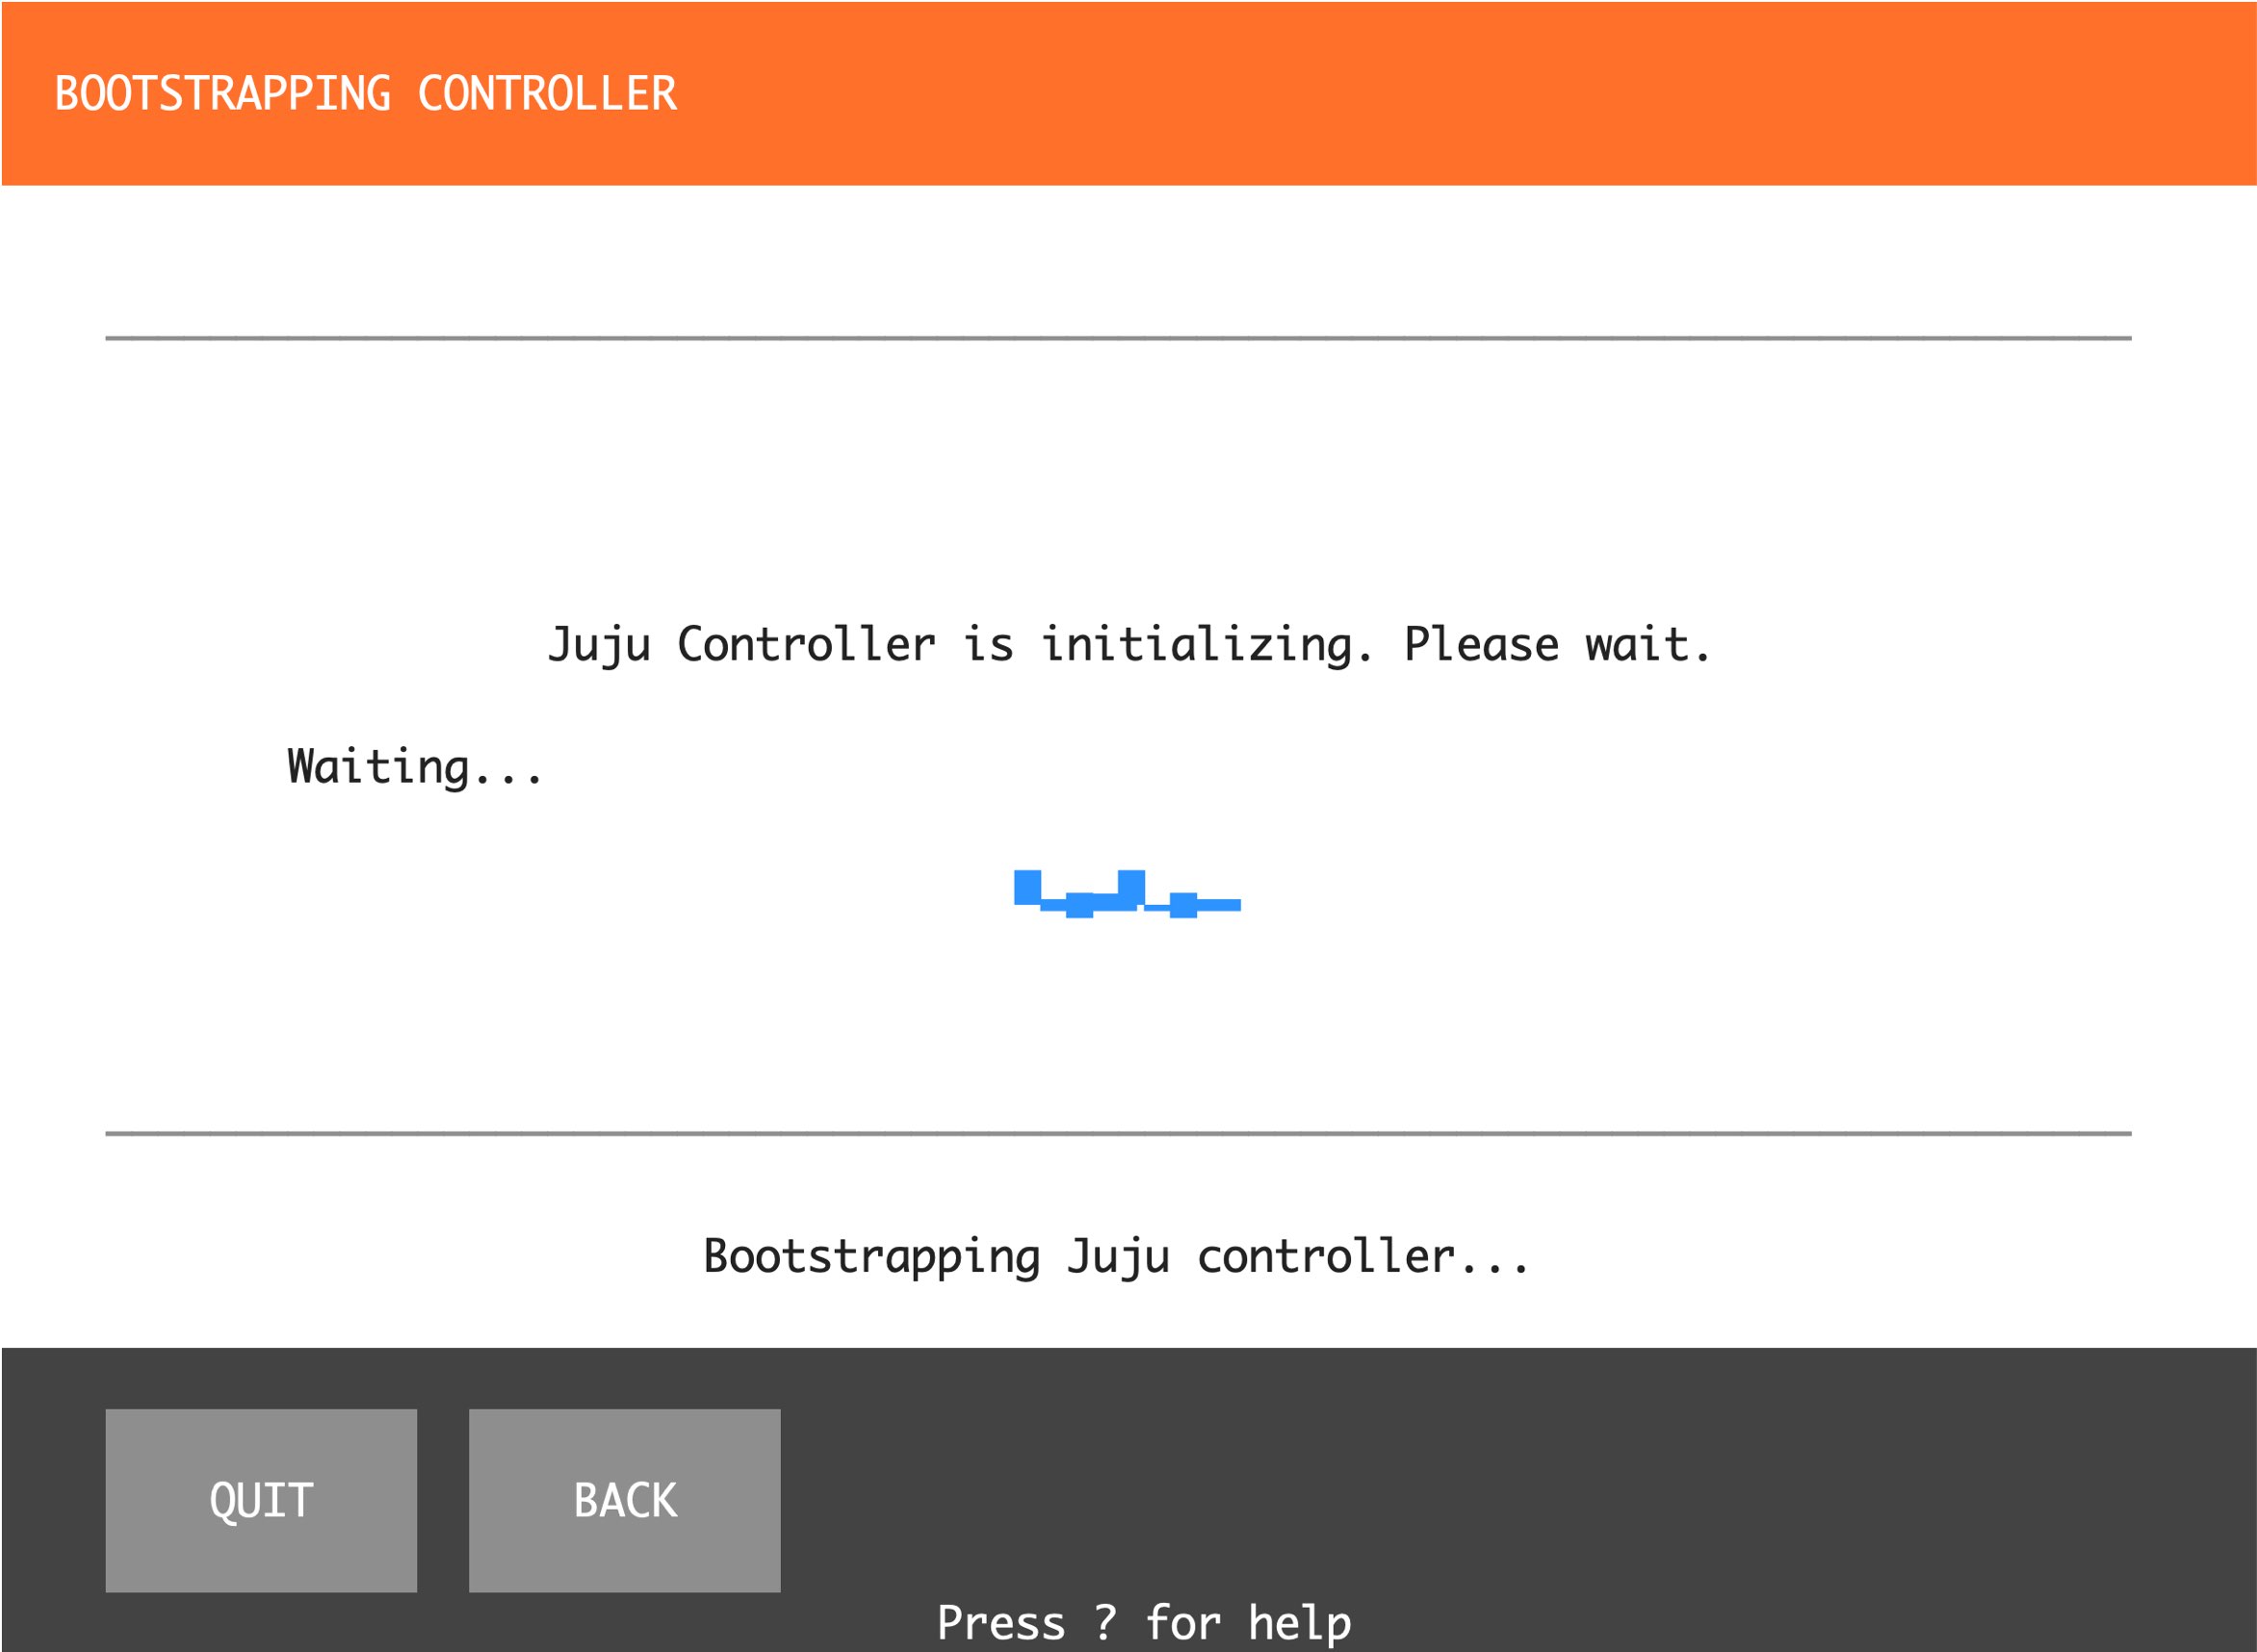 Juju Controller is initializing. Please wait.